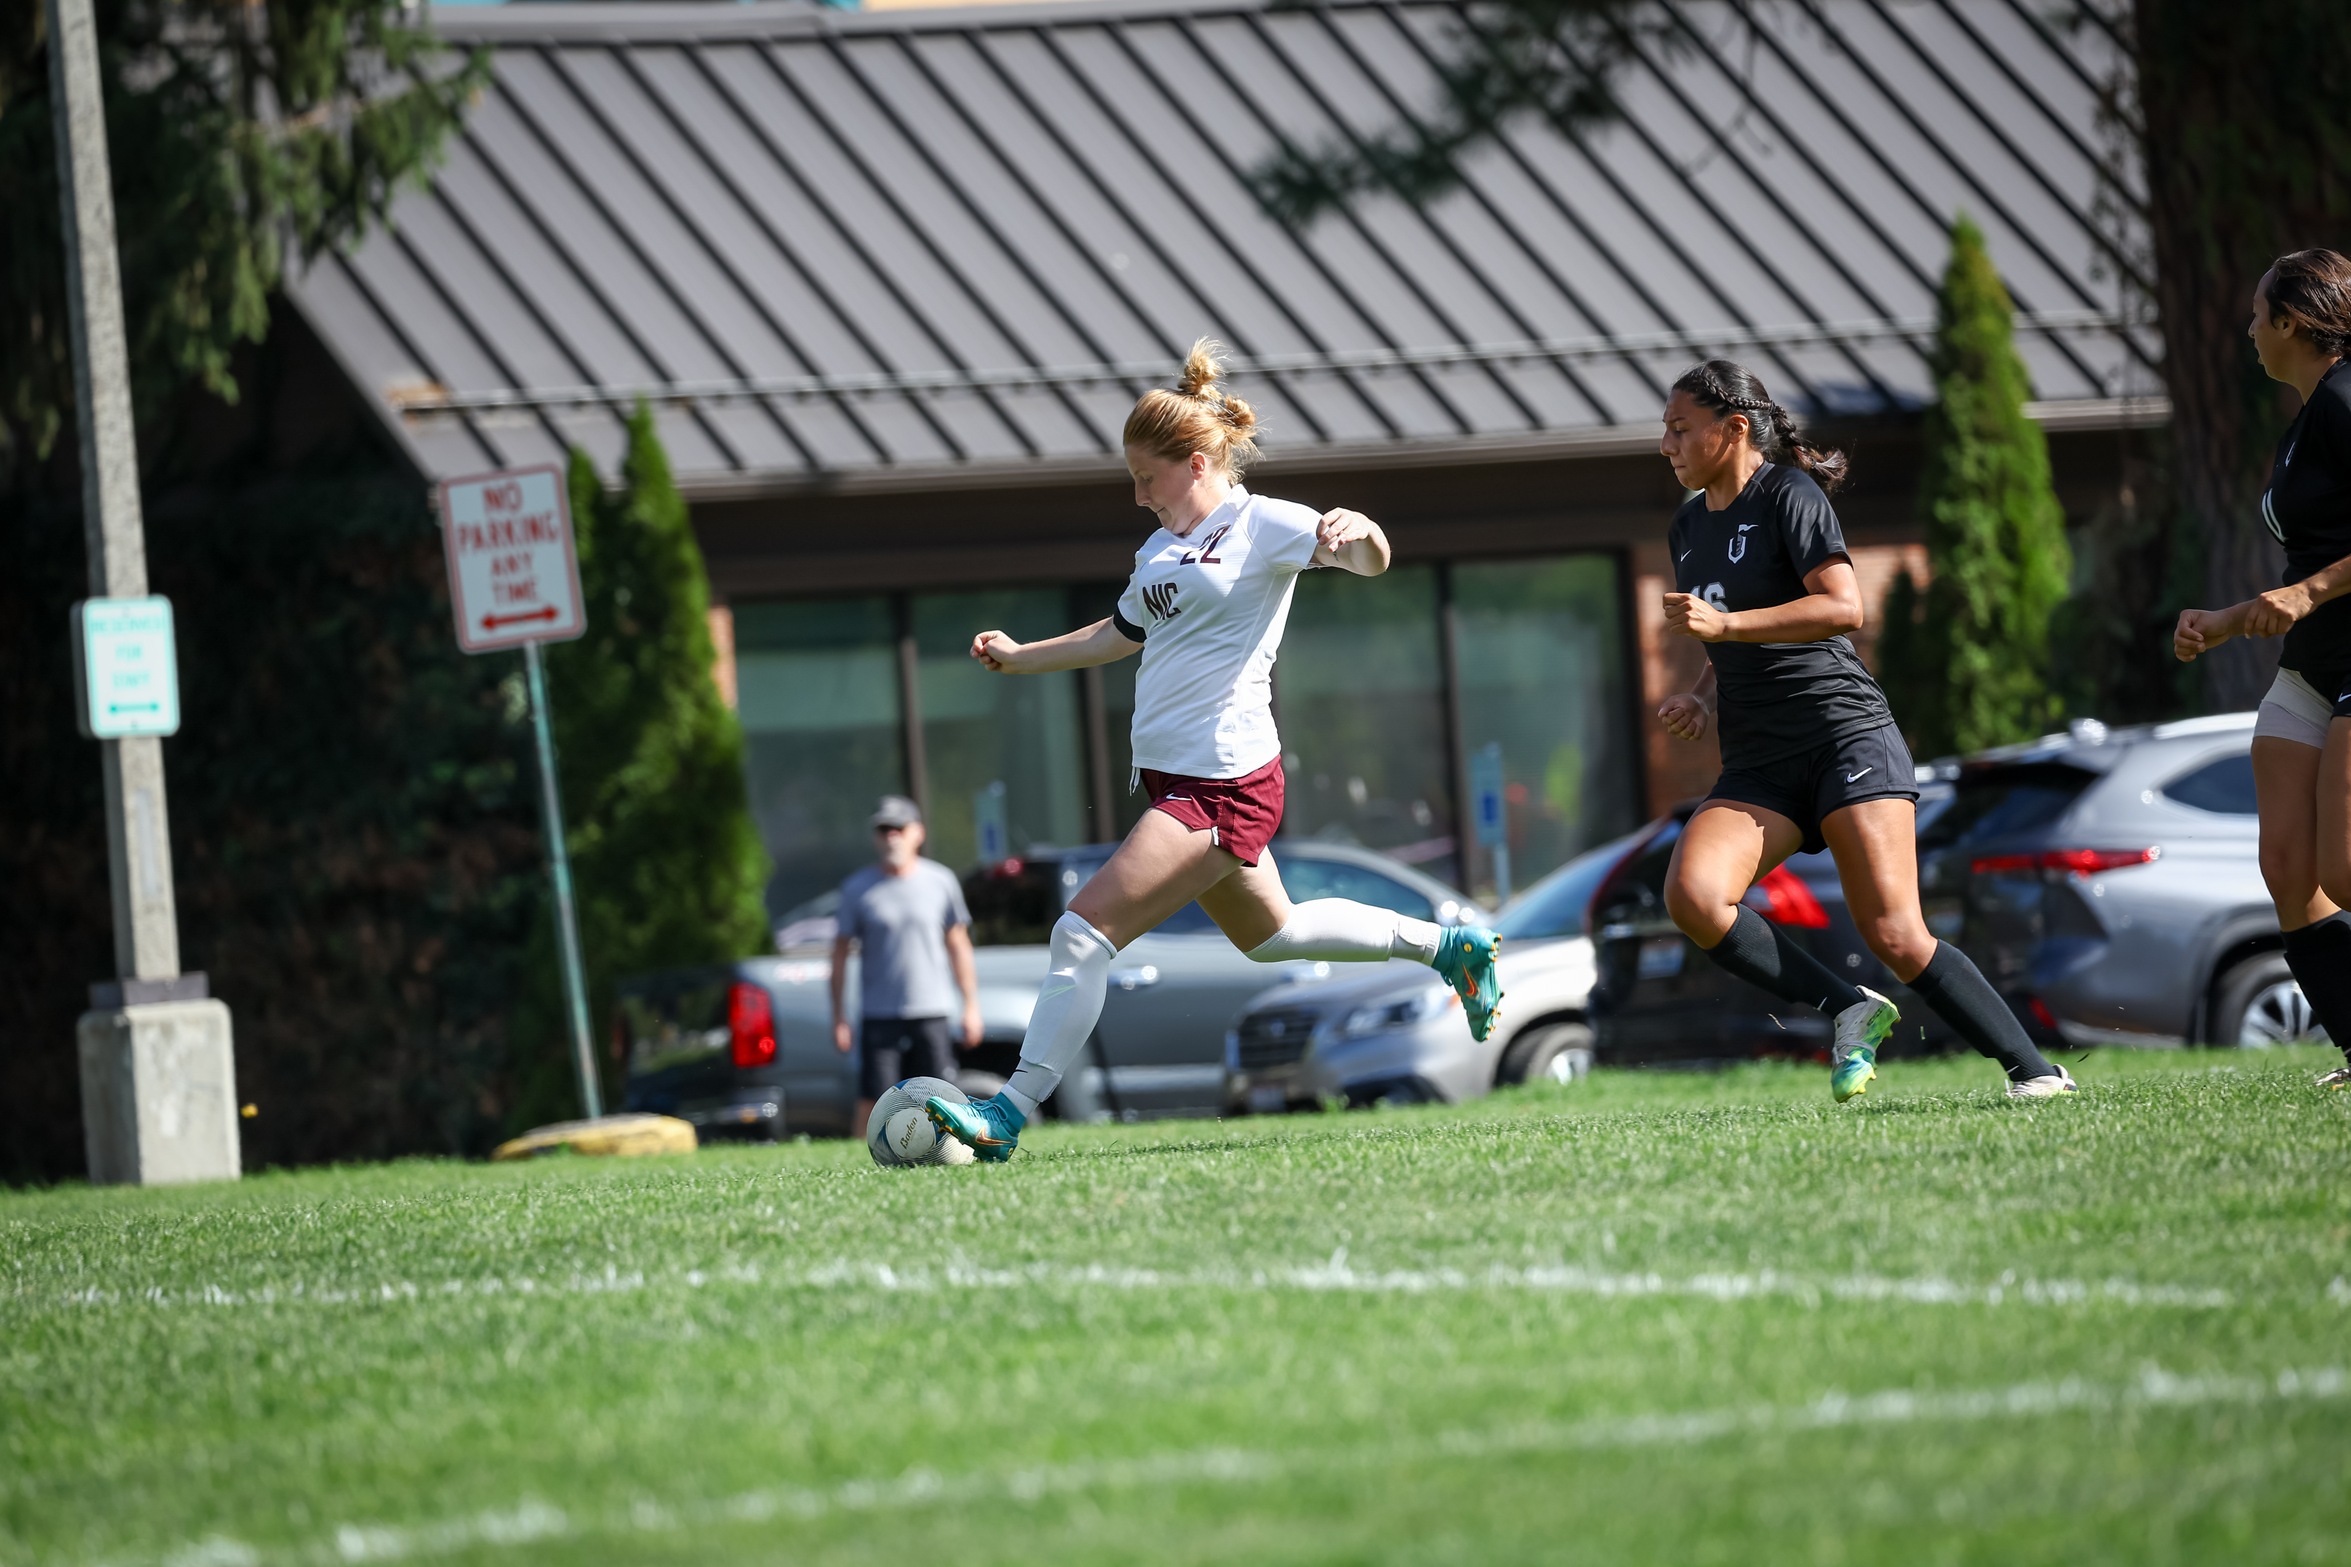 Soccer player Macie McElhenney brings ball down the field.